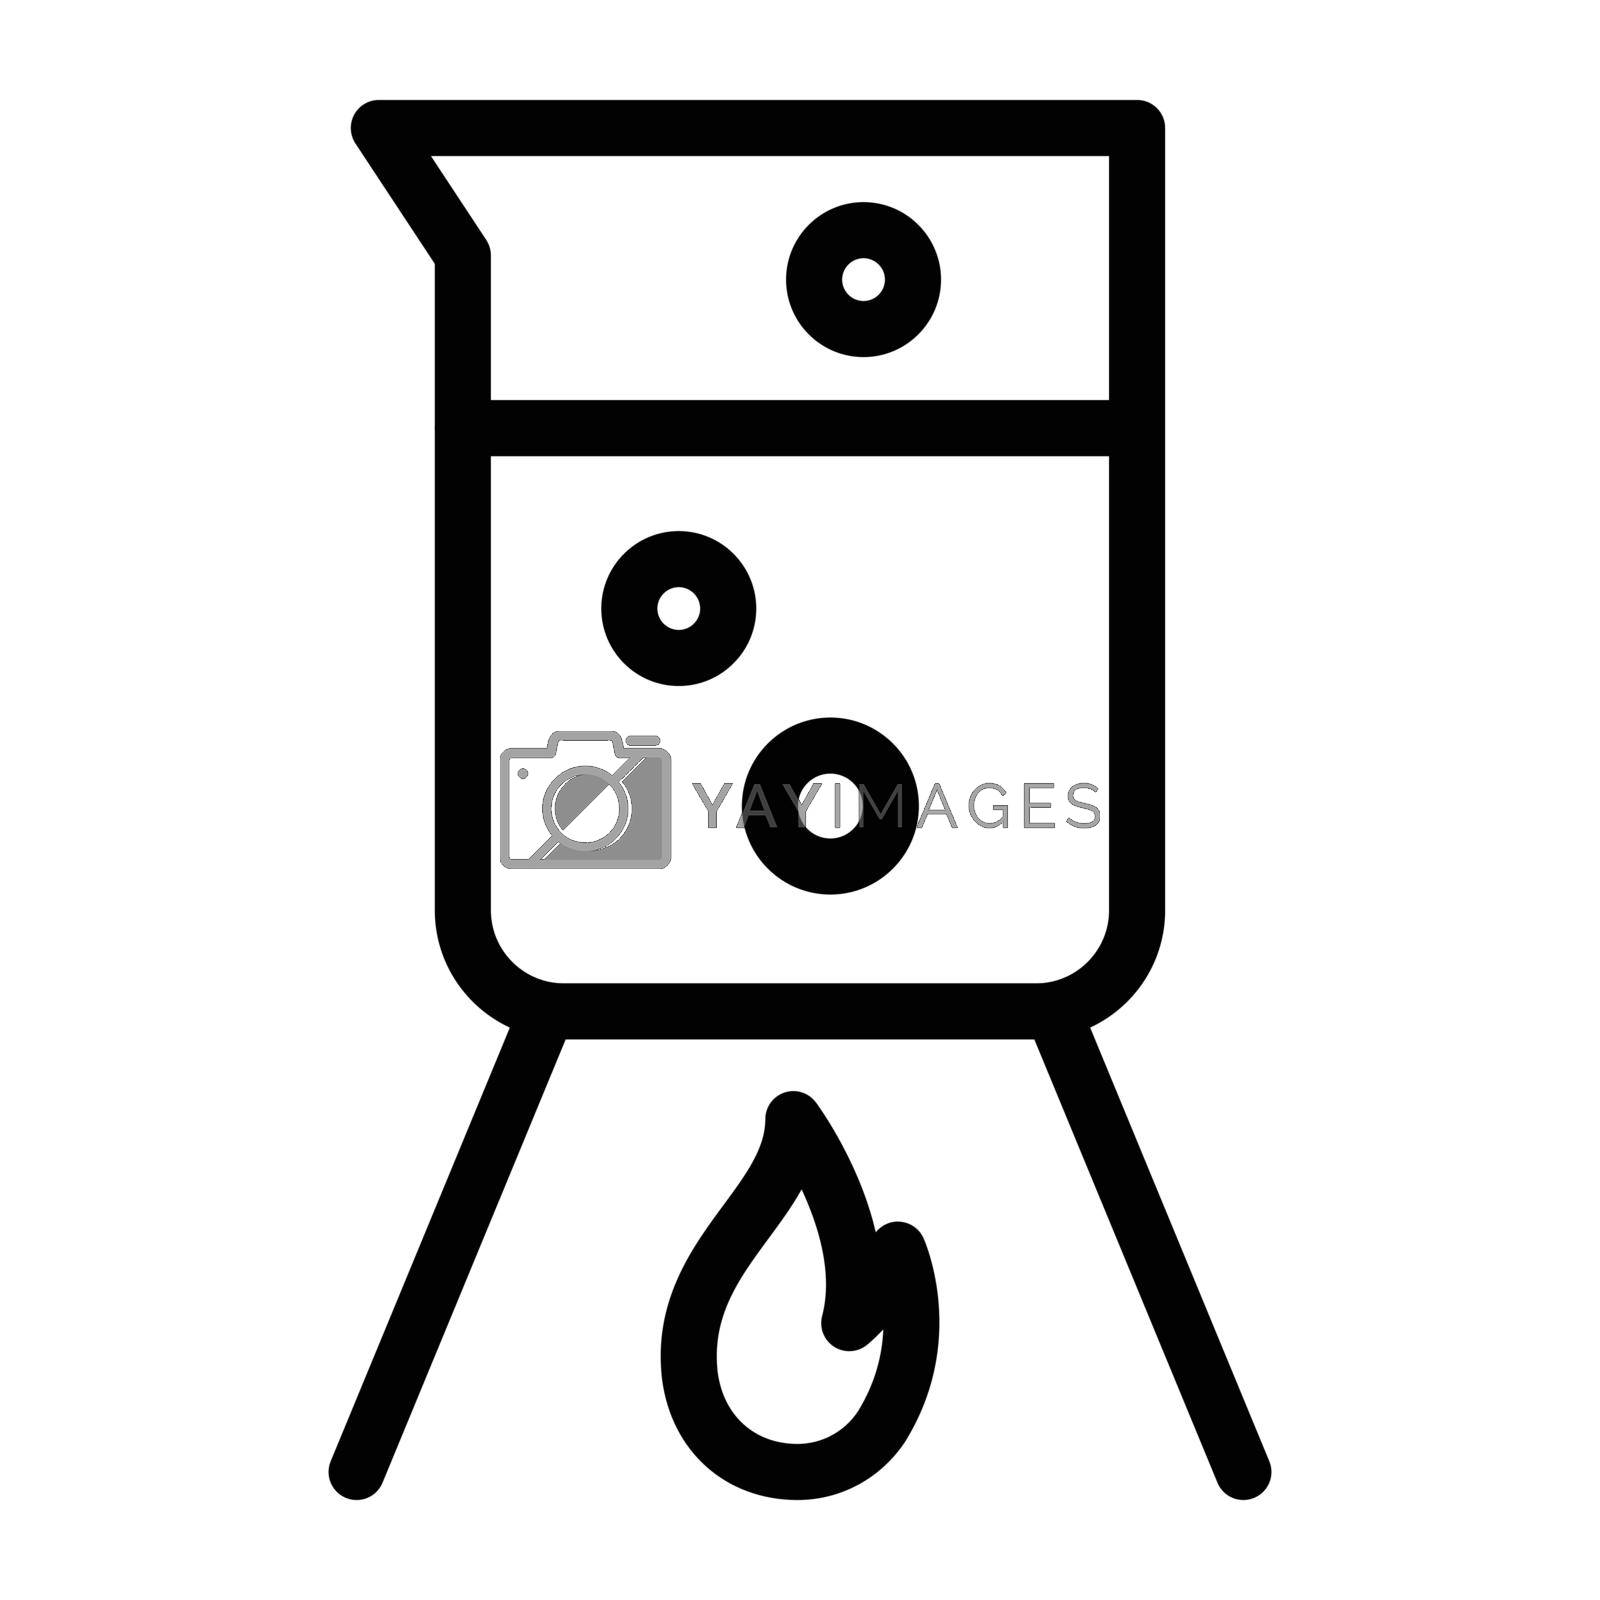 Royalty free image of burner  by FlaticonsDesign